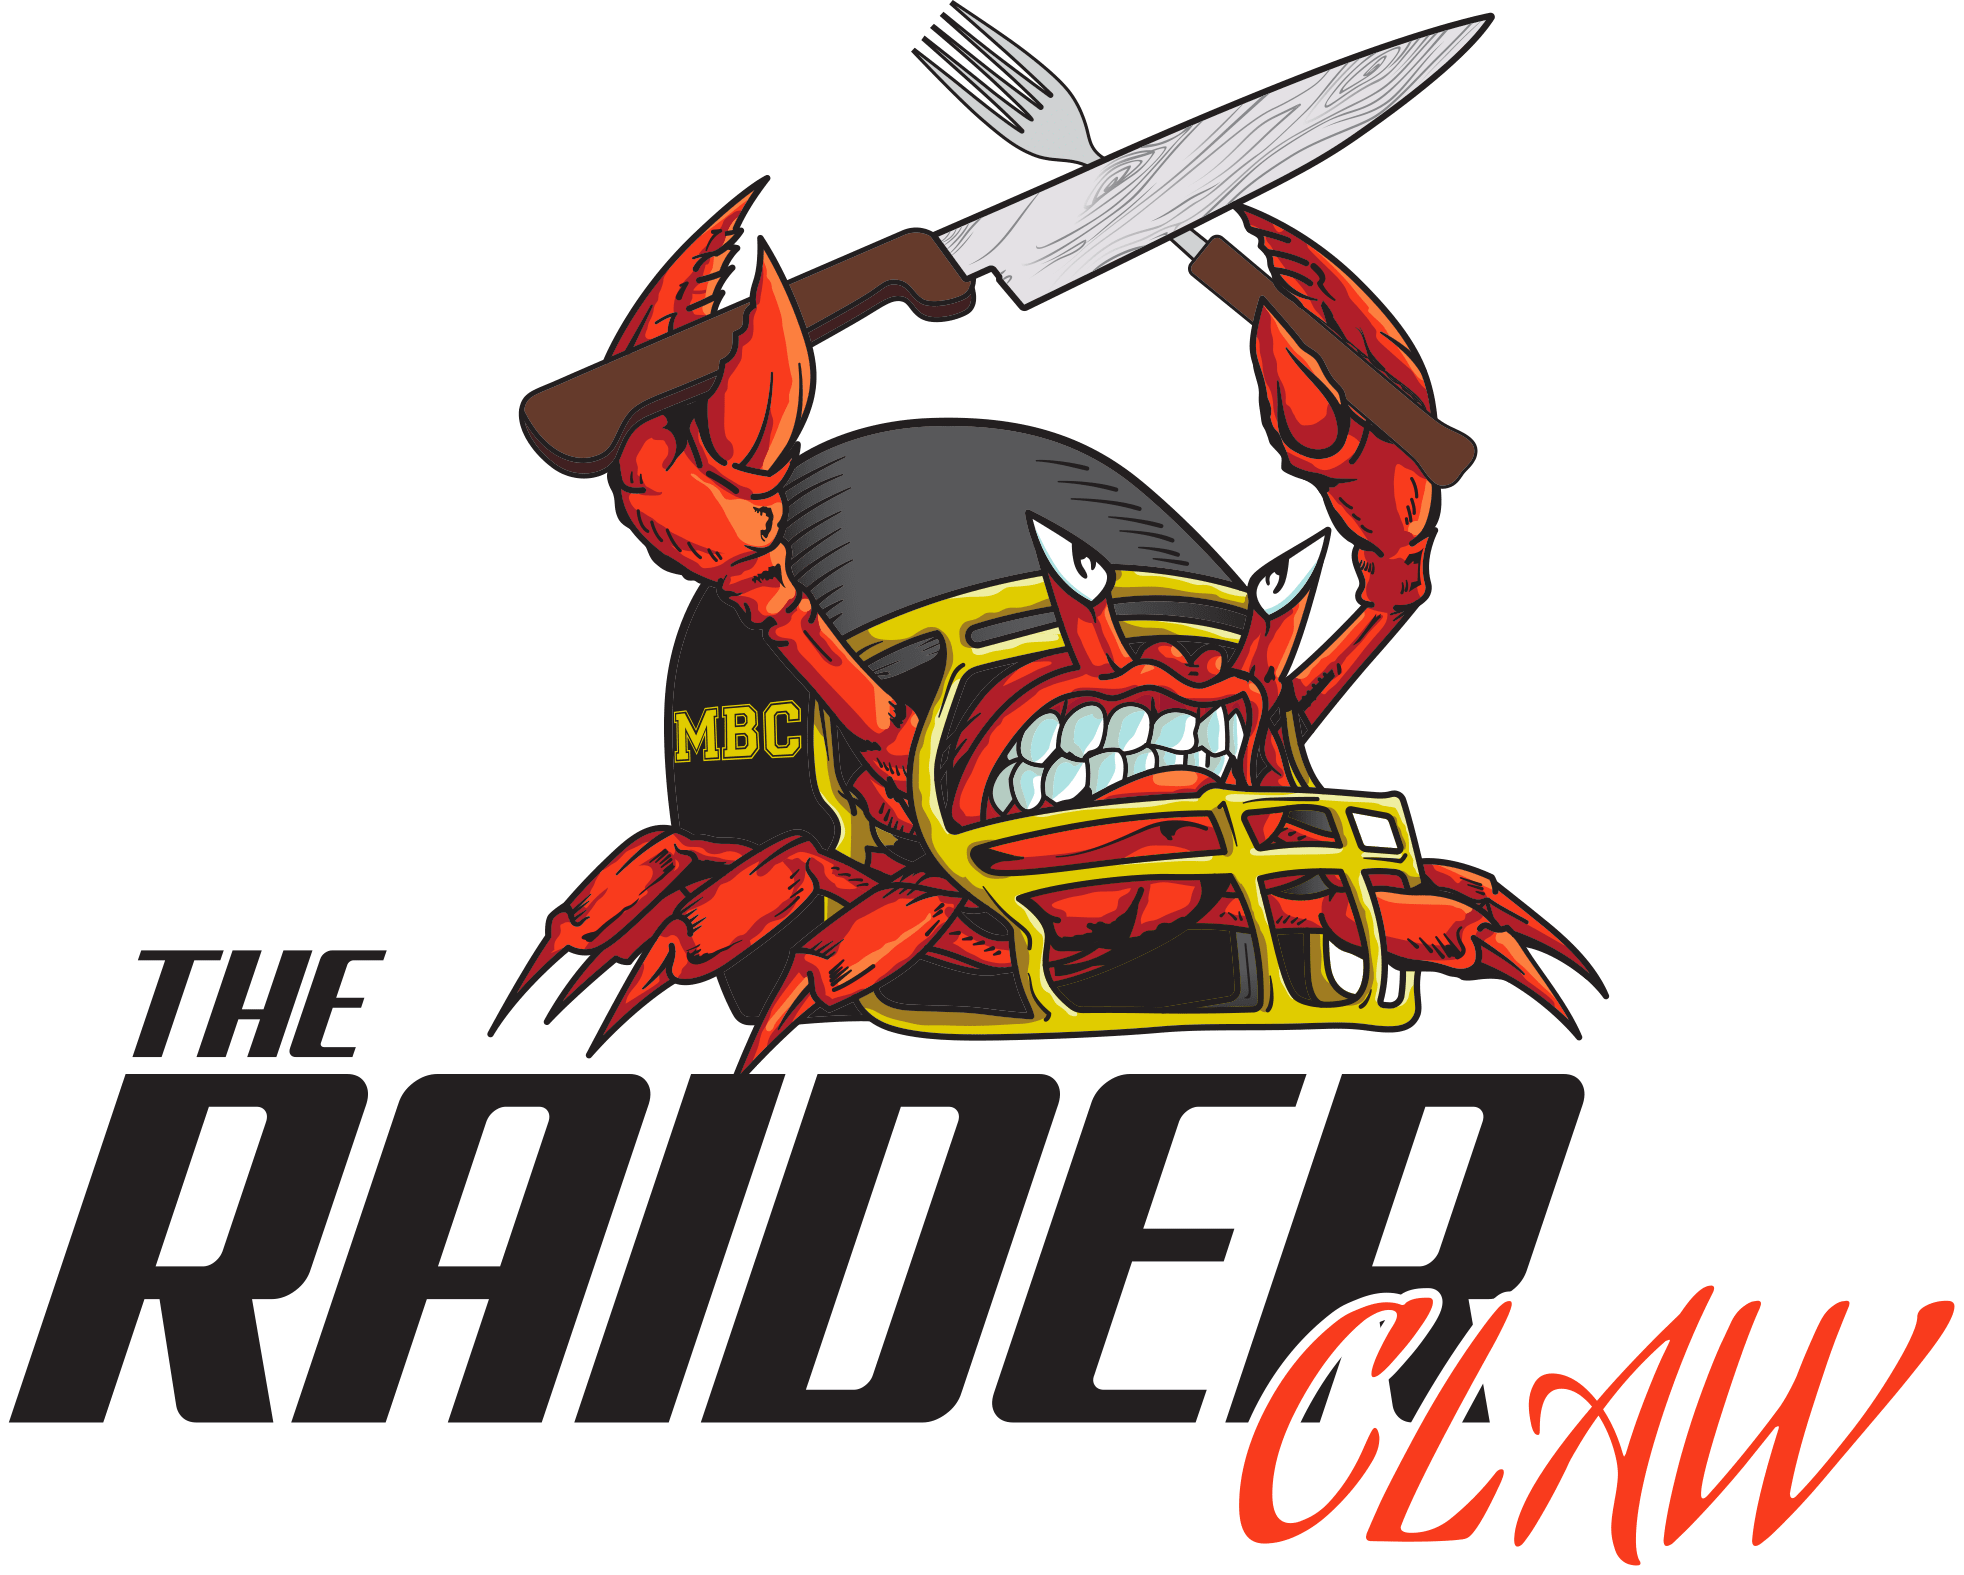 The Raider Claw Menu